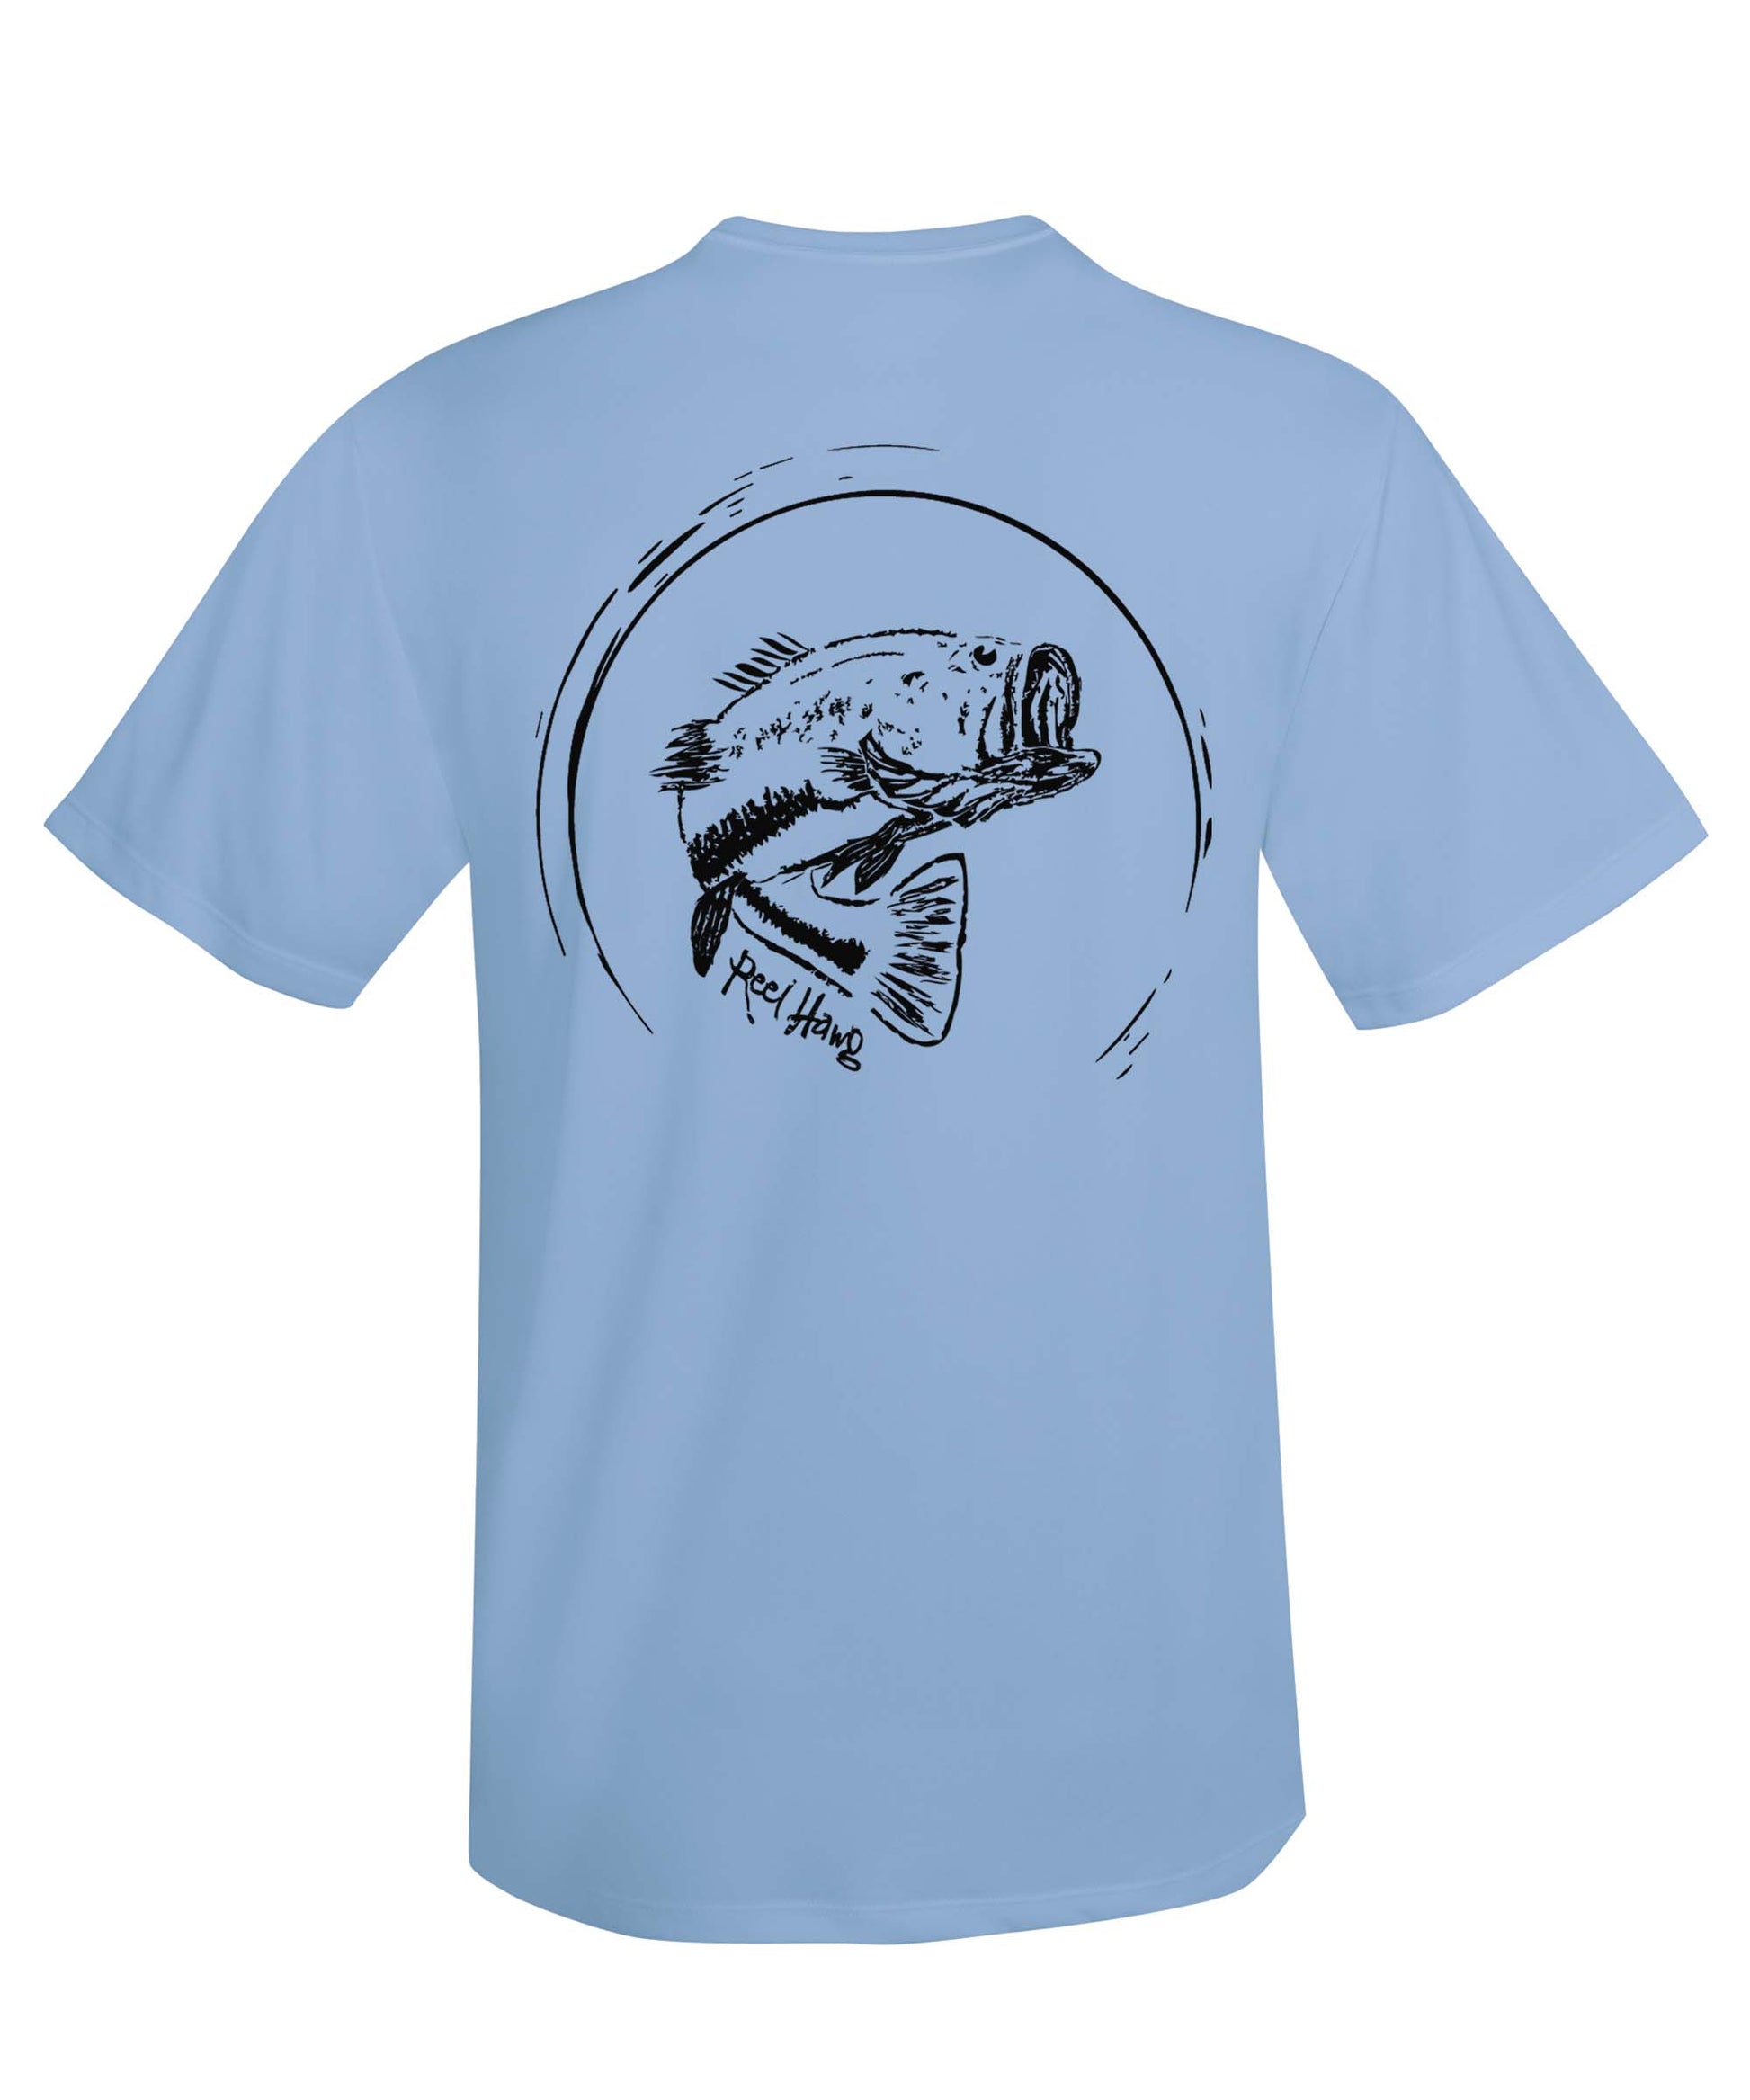 XtraFly Apparel Womens Largemouth Bass Freshwater Fishing Fisherman Fish  Sport V-Neck T-Shirt 